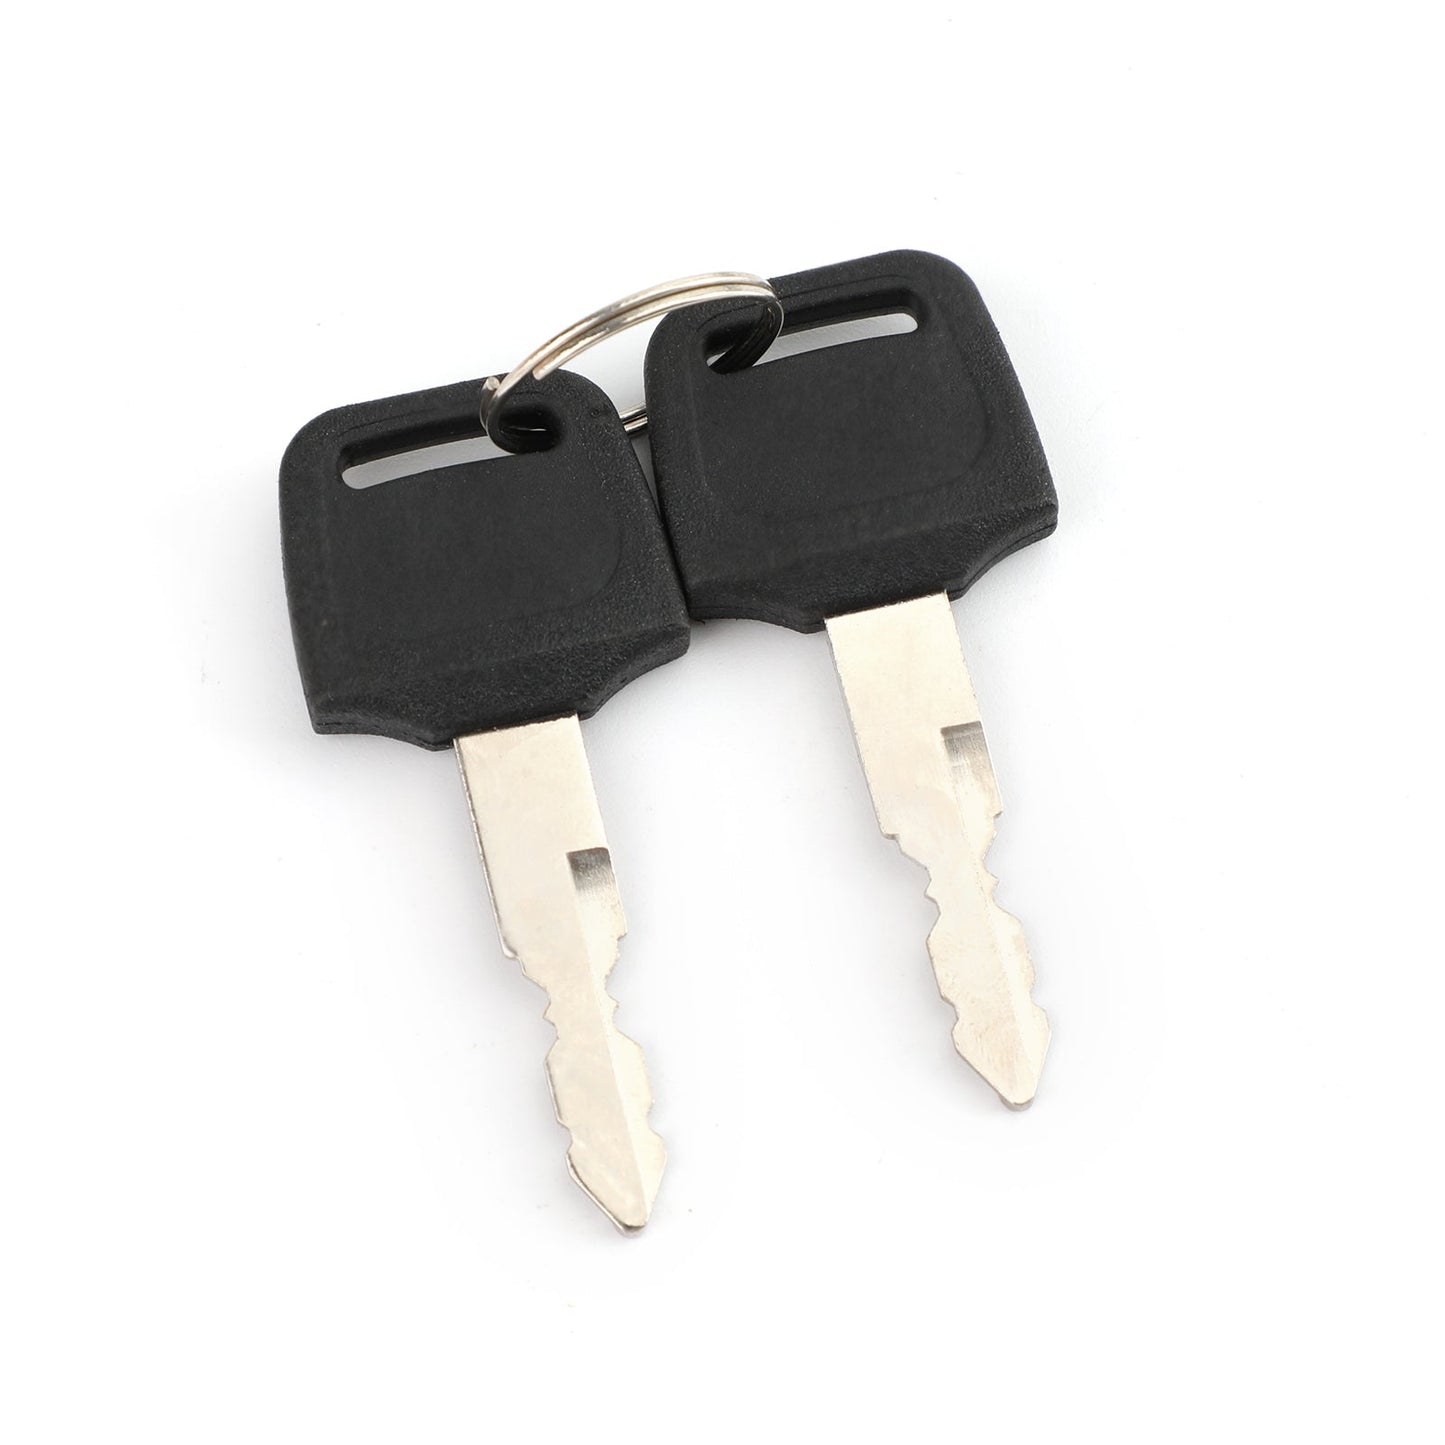 Ignition Switch Fuel Cap Seat Lock Keys Set For Honda XR125L 03-08 CLR125 1998